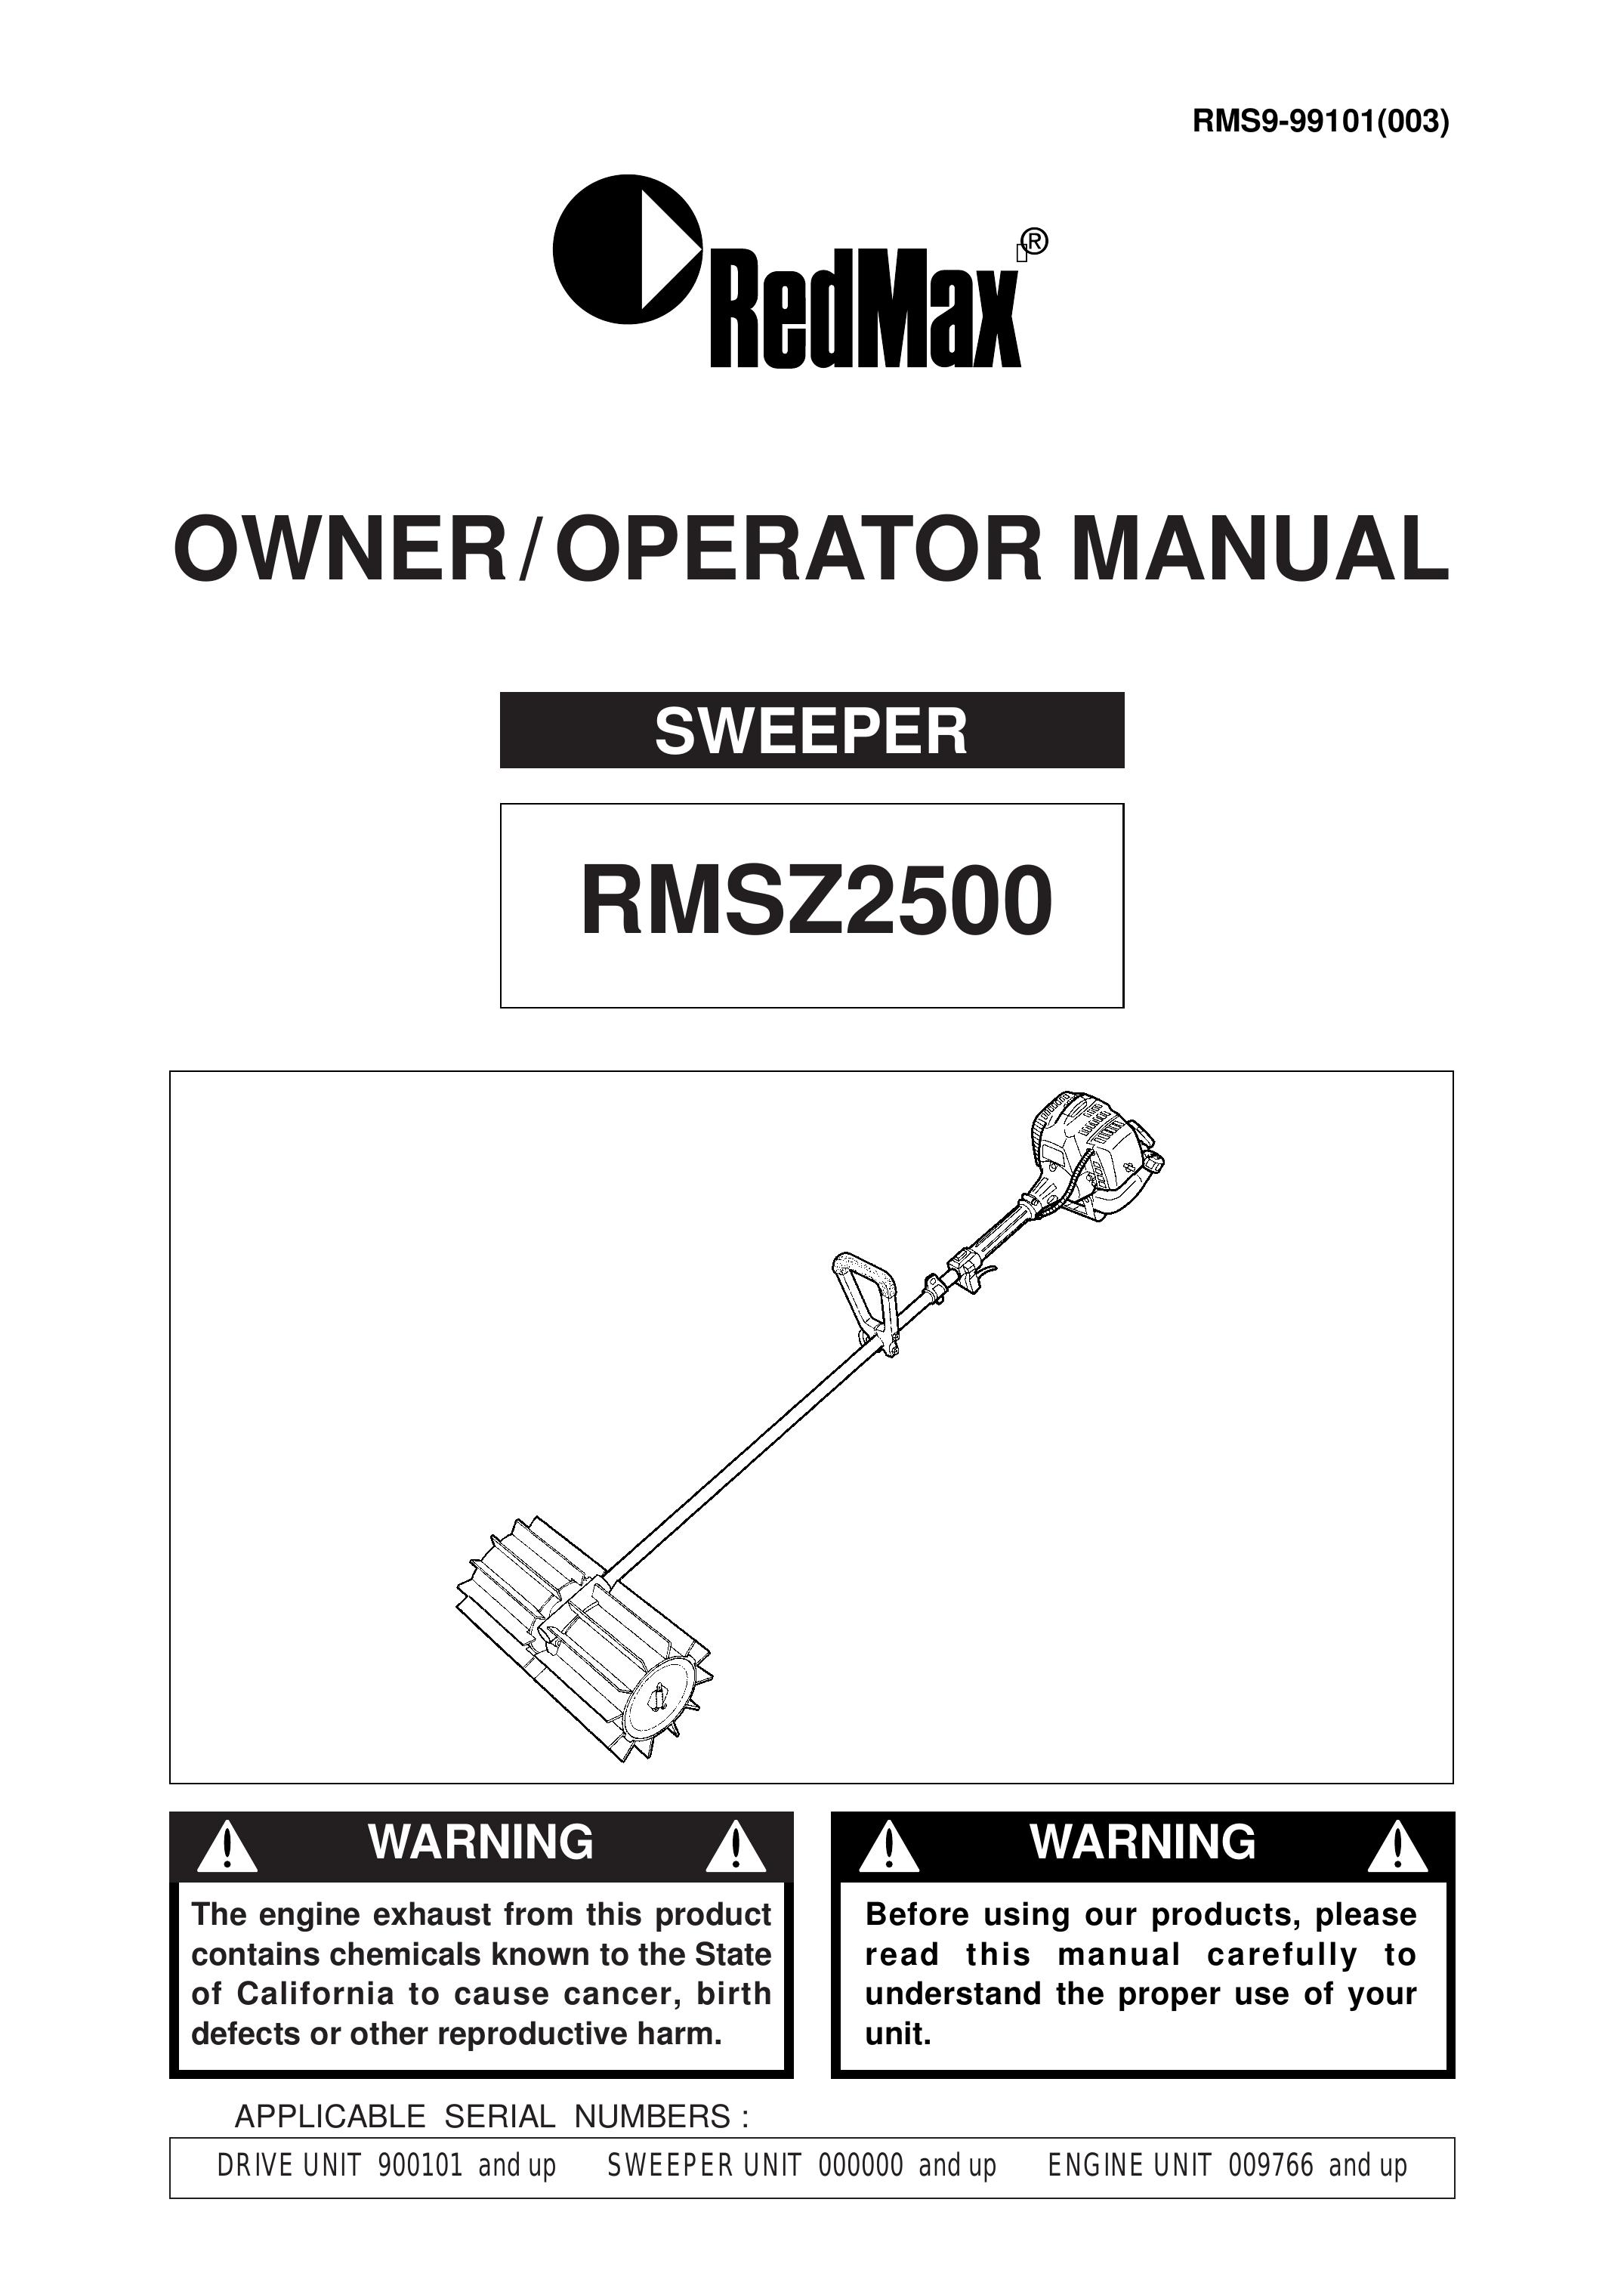 RedMax RMSZ2500 Lawn Sweeper User Manual